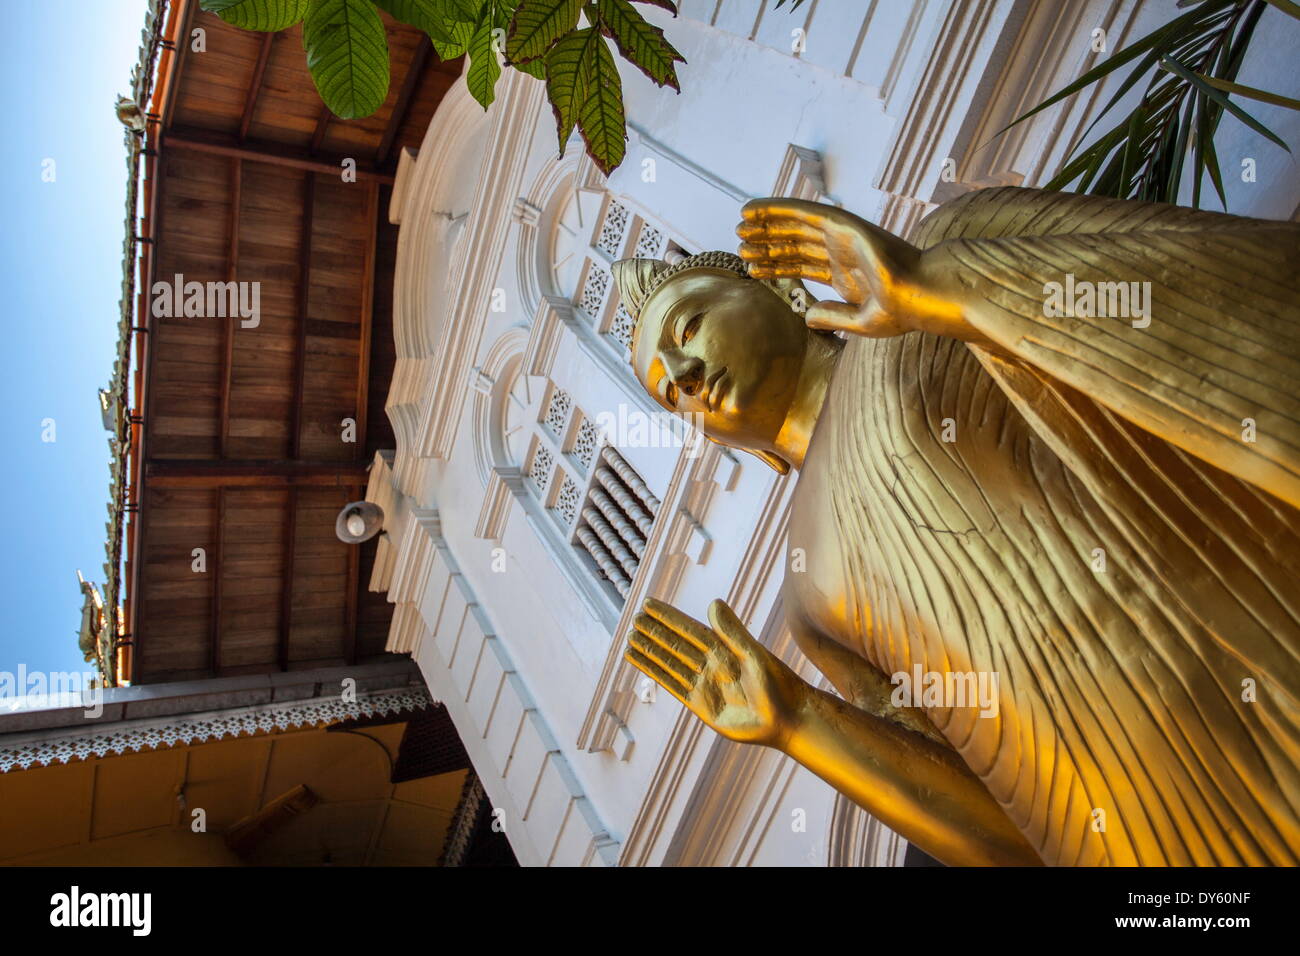 Golden statue at the entrance of Gangaramaya Temple, Colombo, Sri Lanka, Asia Stock Photo